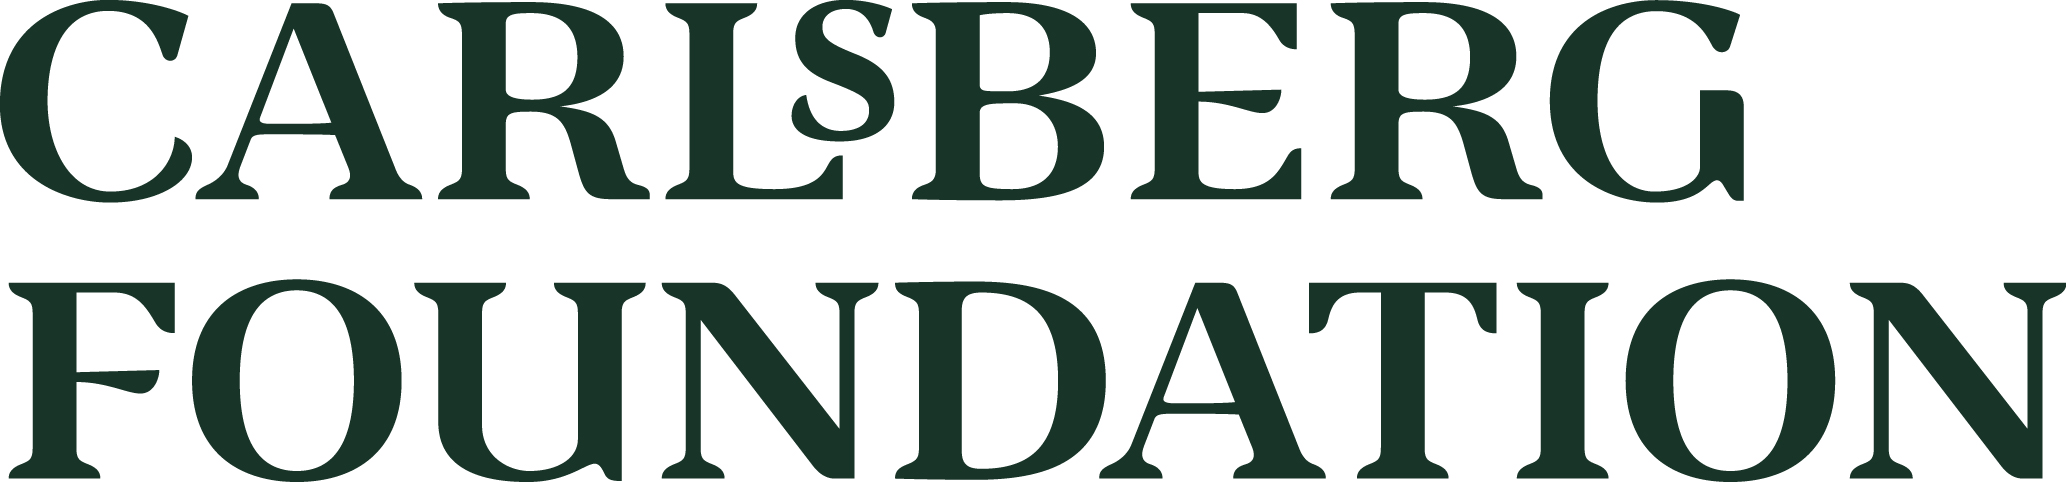 Carlsberg foundation logo